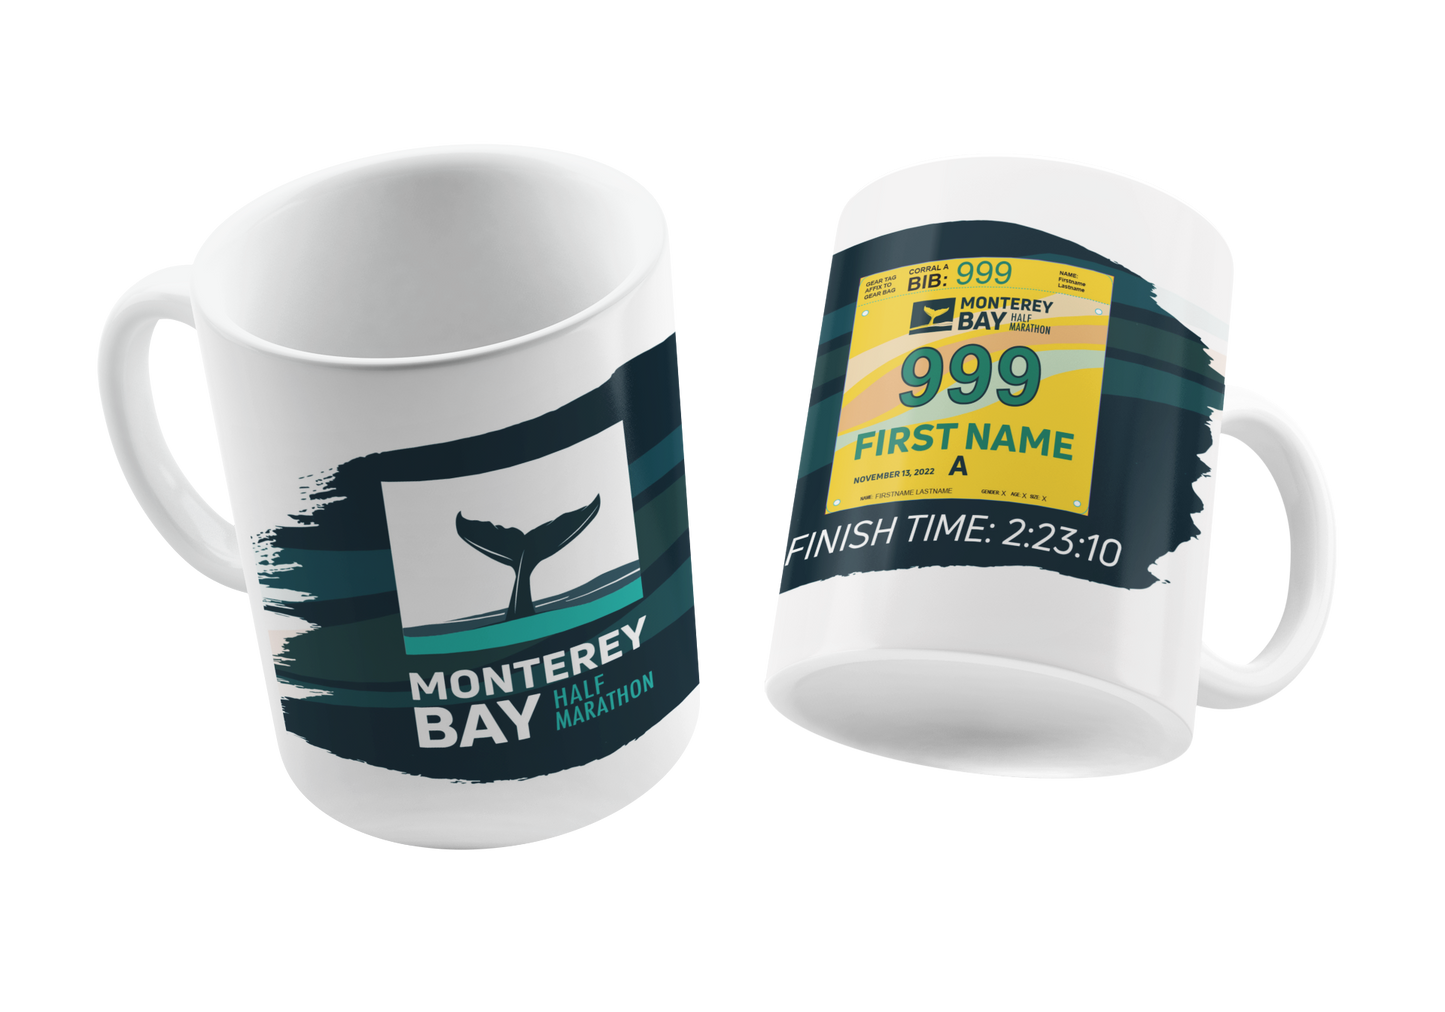 2022 Monterey Bay Half Marathon Finisher Mug with Personalized Bib and Time